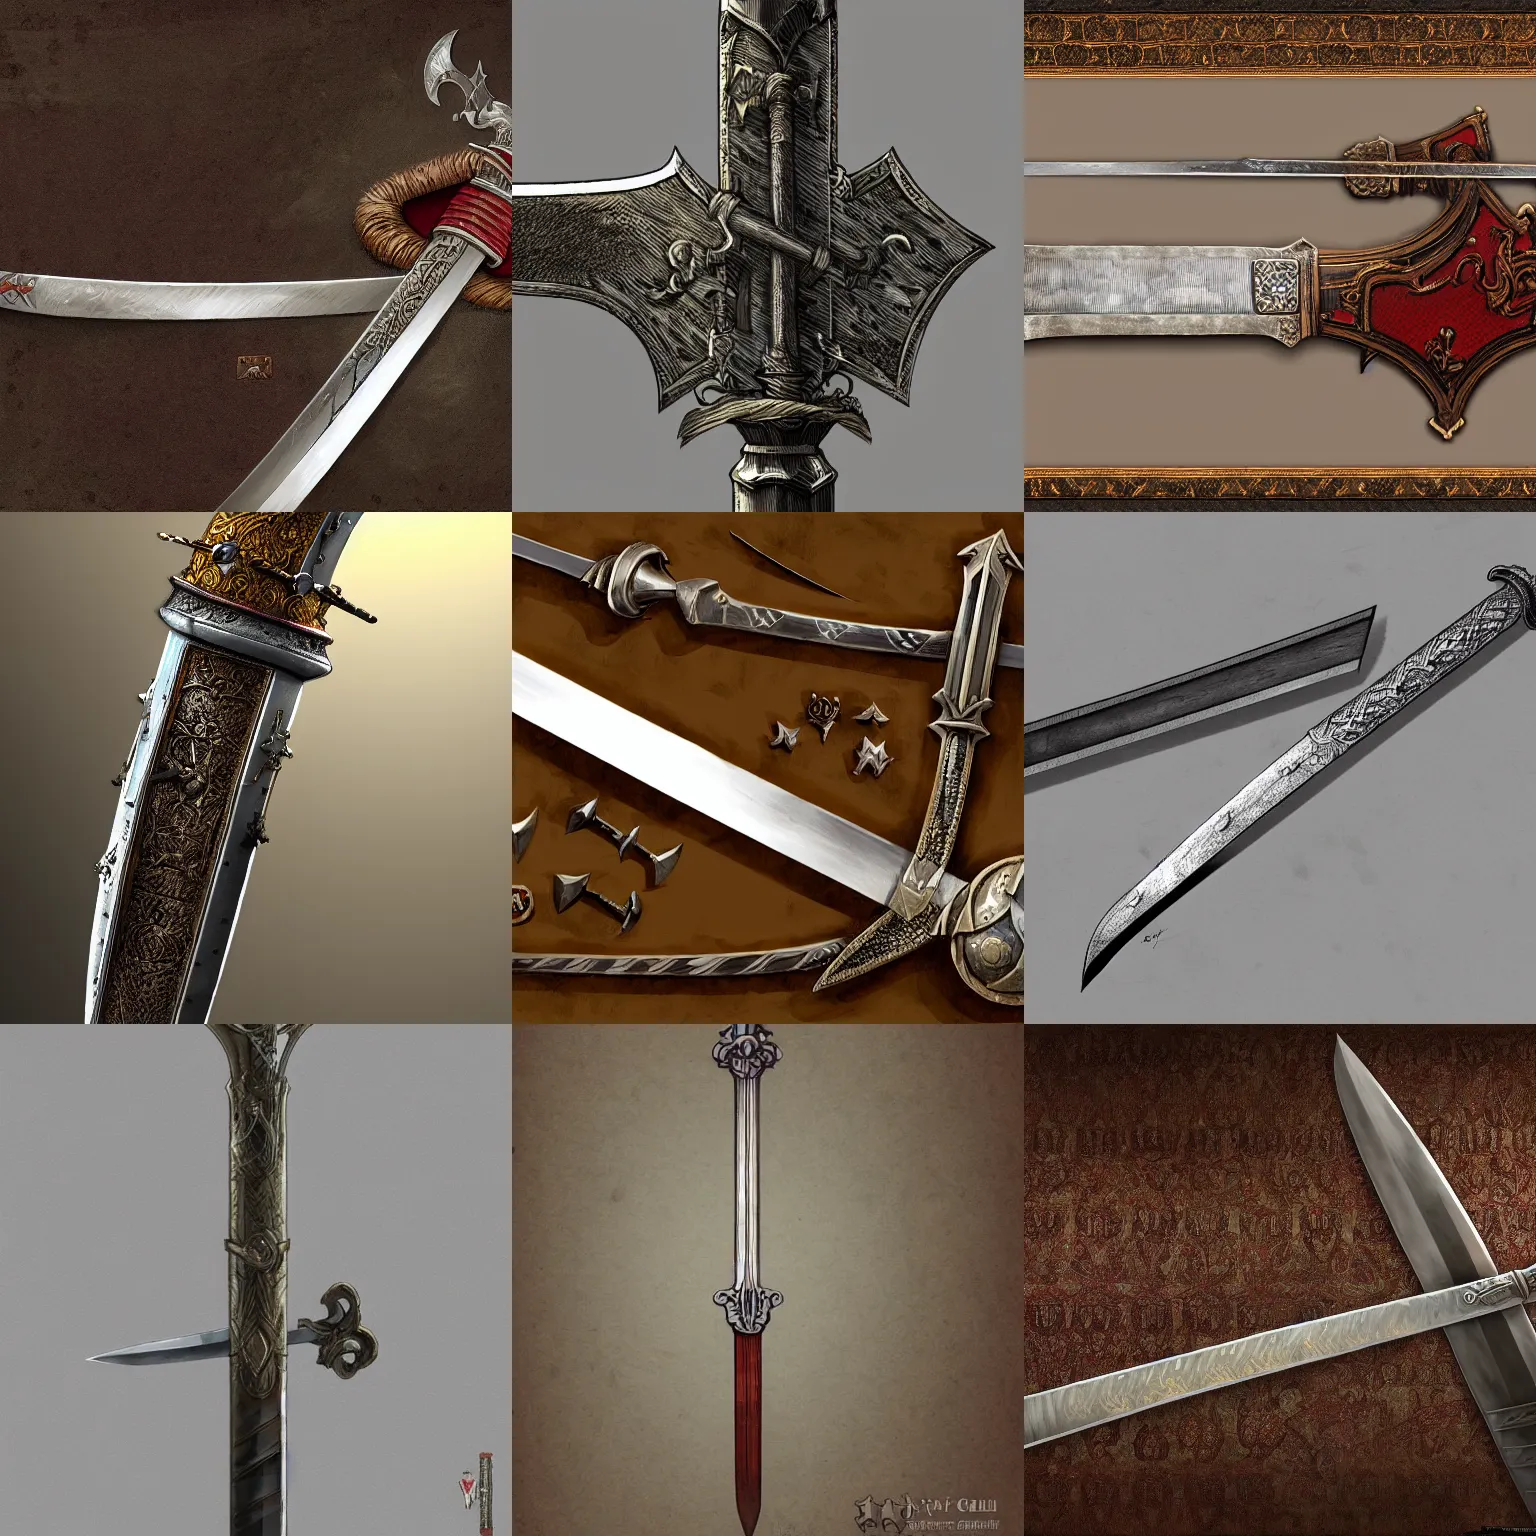 Prompt: medieval sword in arms room, highly detailed, artstation, concept art, sharp focus, rutkoswki, jurgens, grelin